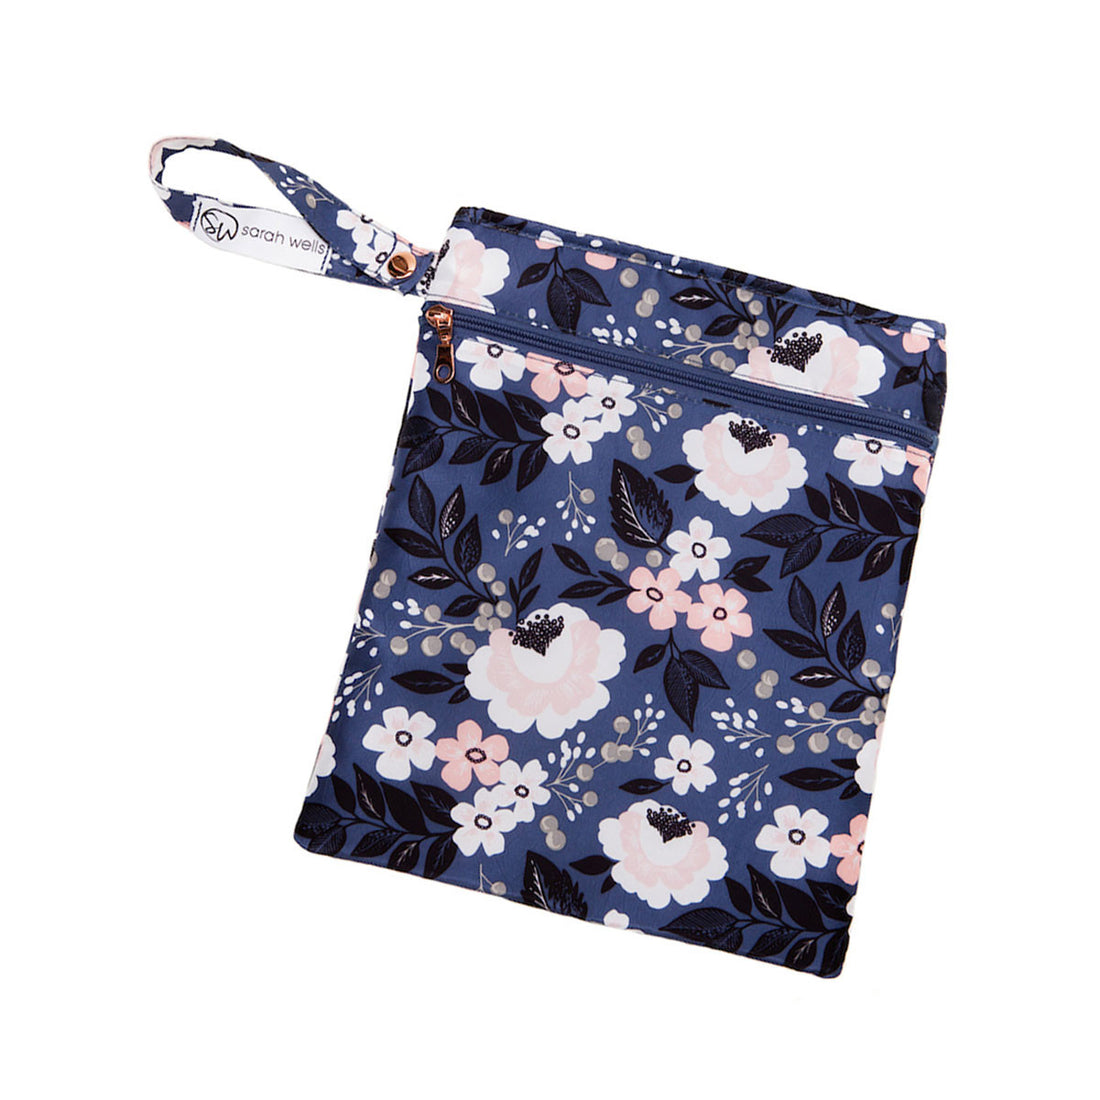 Pumparoo (Le Floral) / Breast Pump Bags &amp; Accessories from Sarah Wells